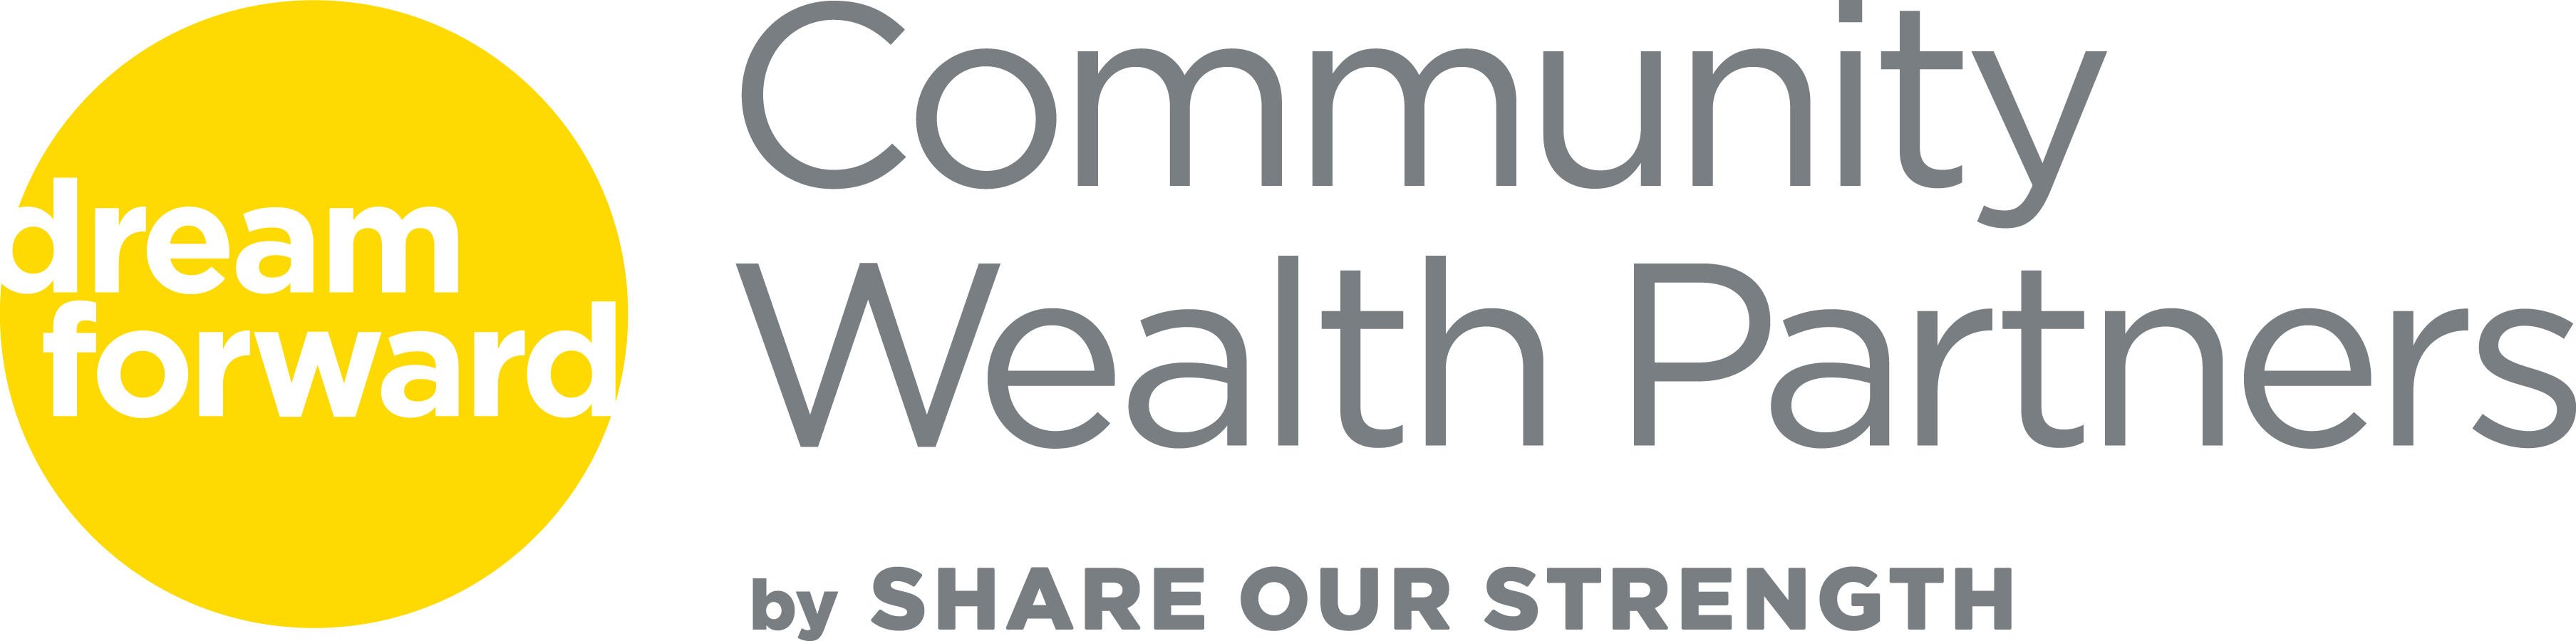 Community Wealth Partners